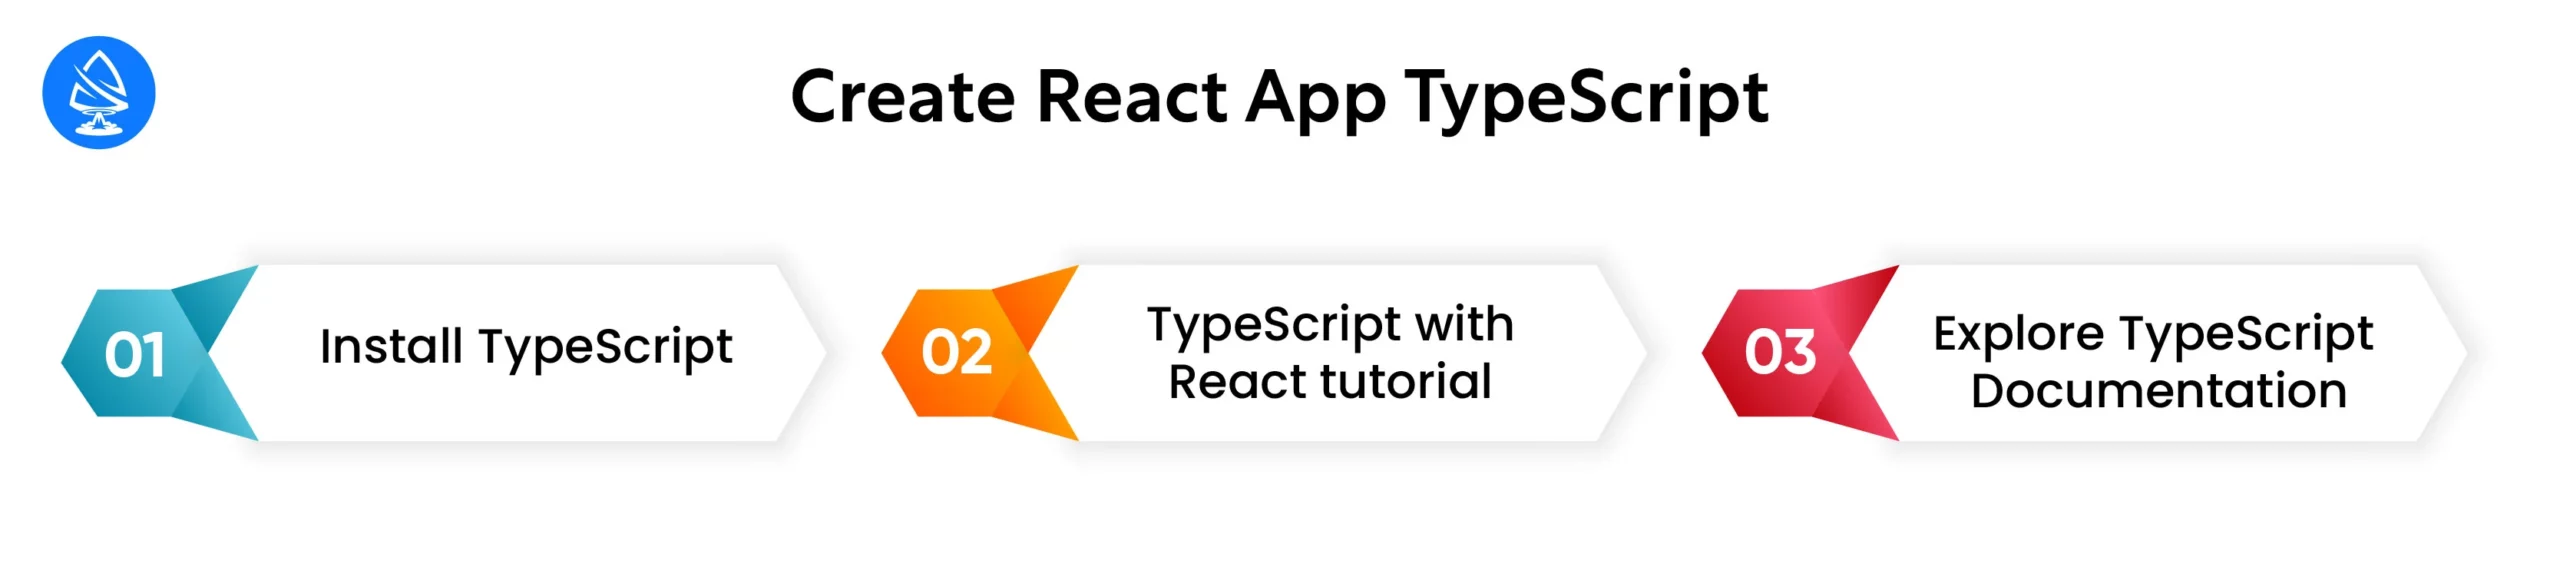 Create React App TypeScript